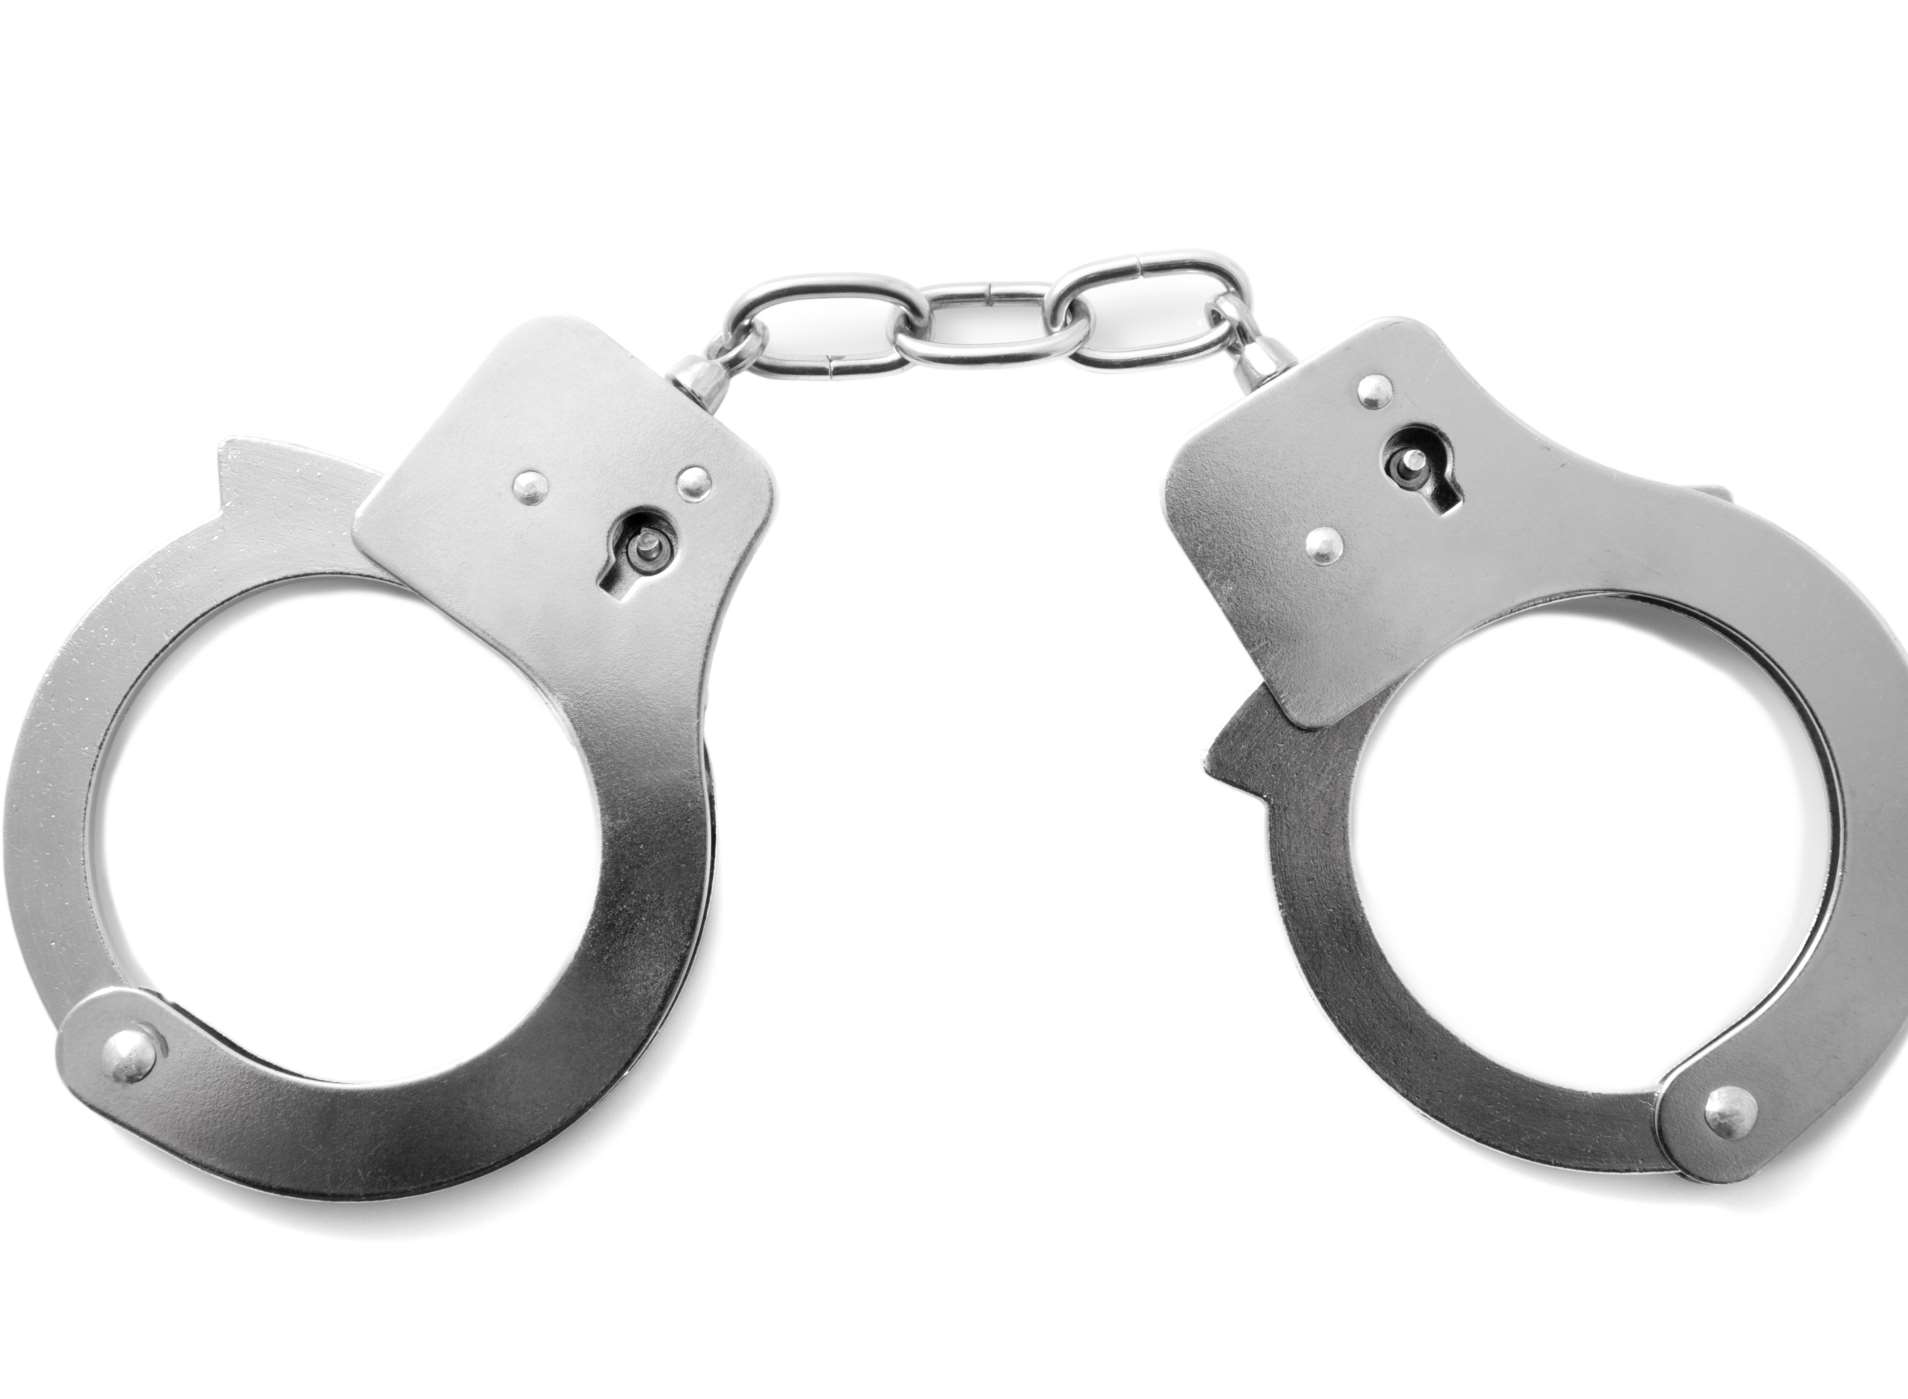 Handcuffs. Stock image. Picture: Thinkstock